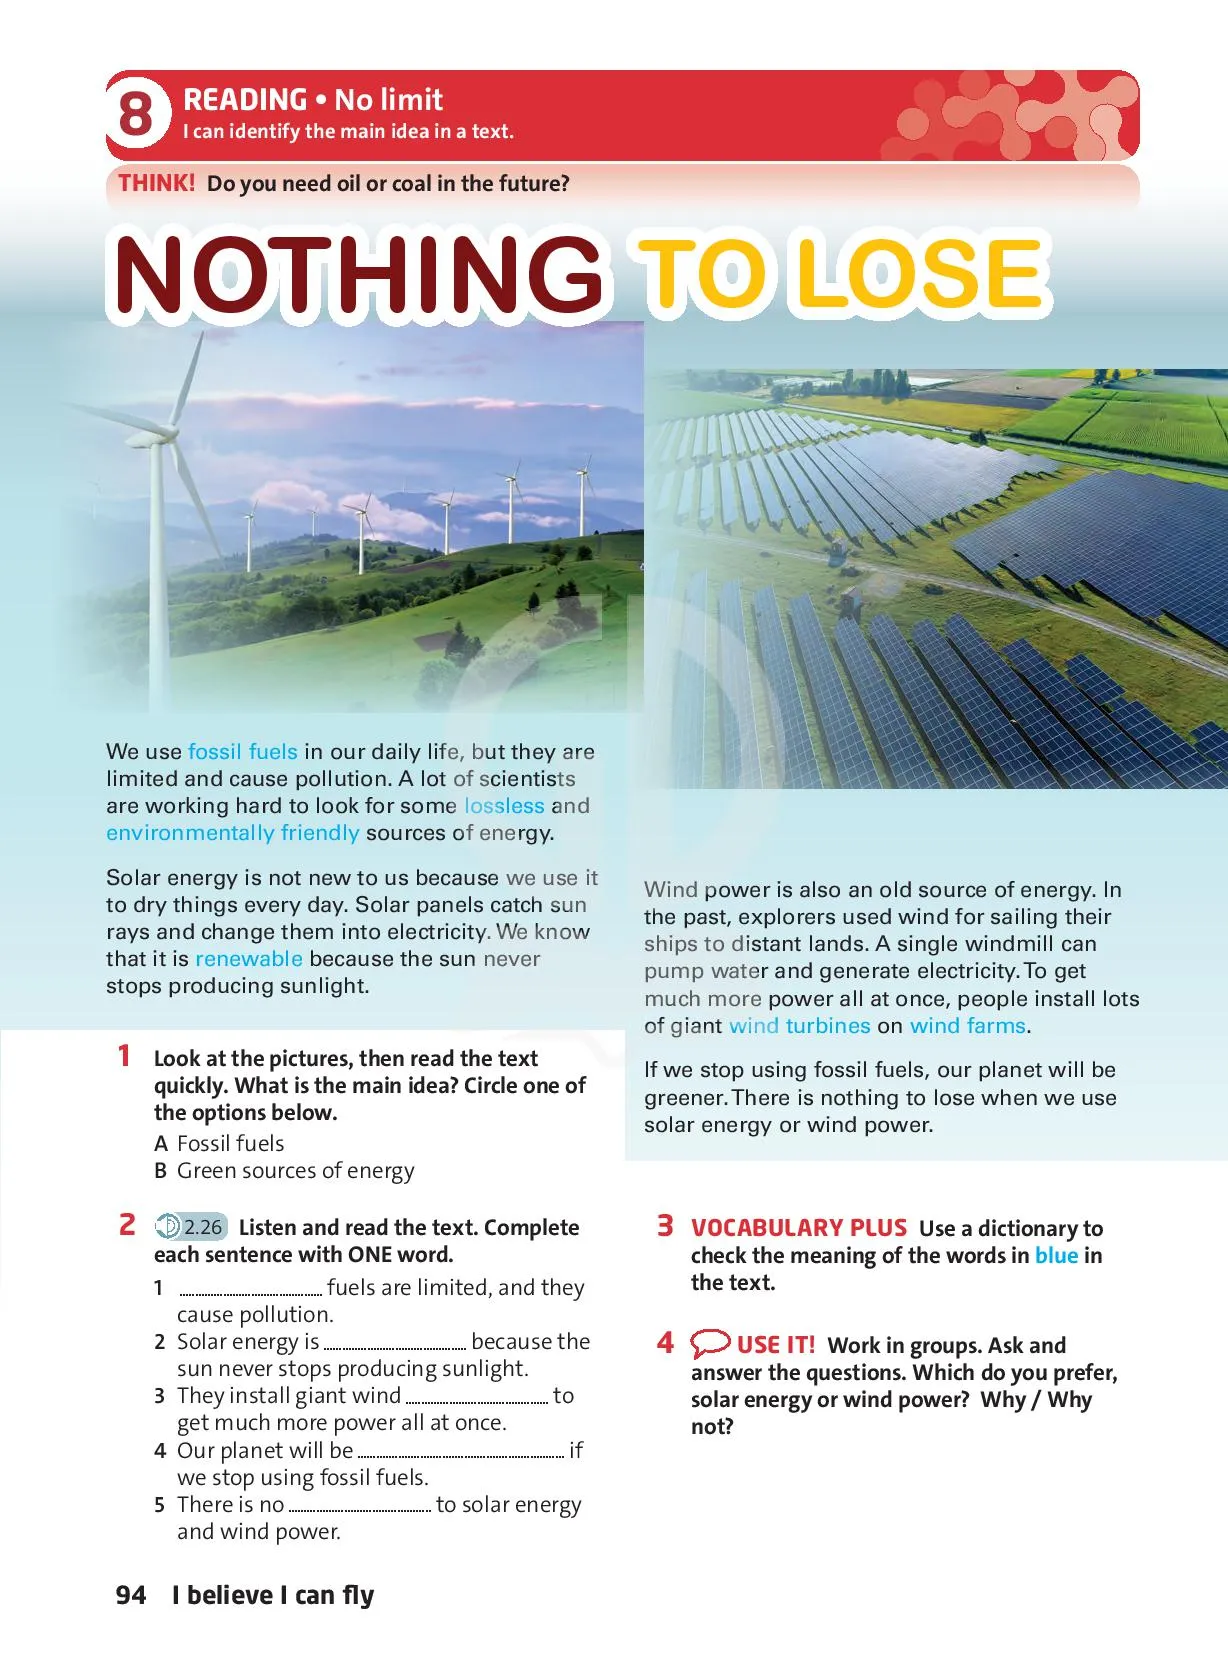 No limit Vocabulary plus: fossil fuels, lossless, renewable, etc.